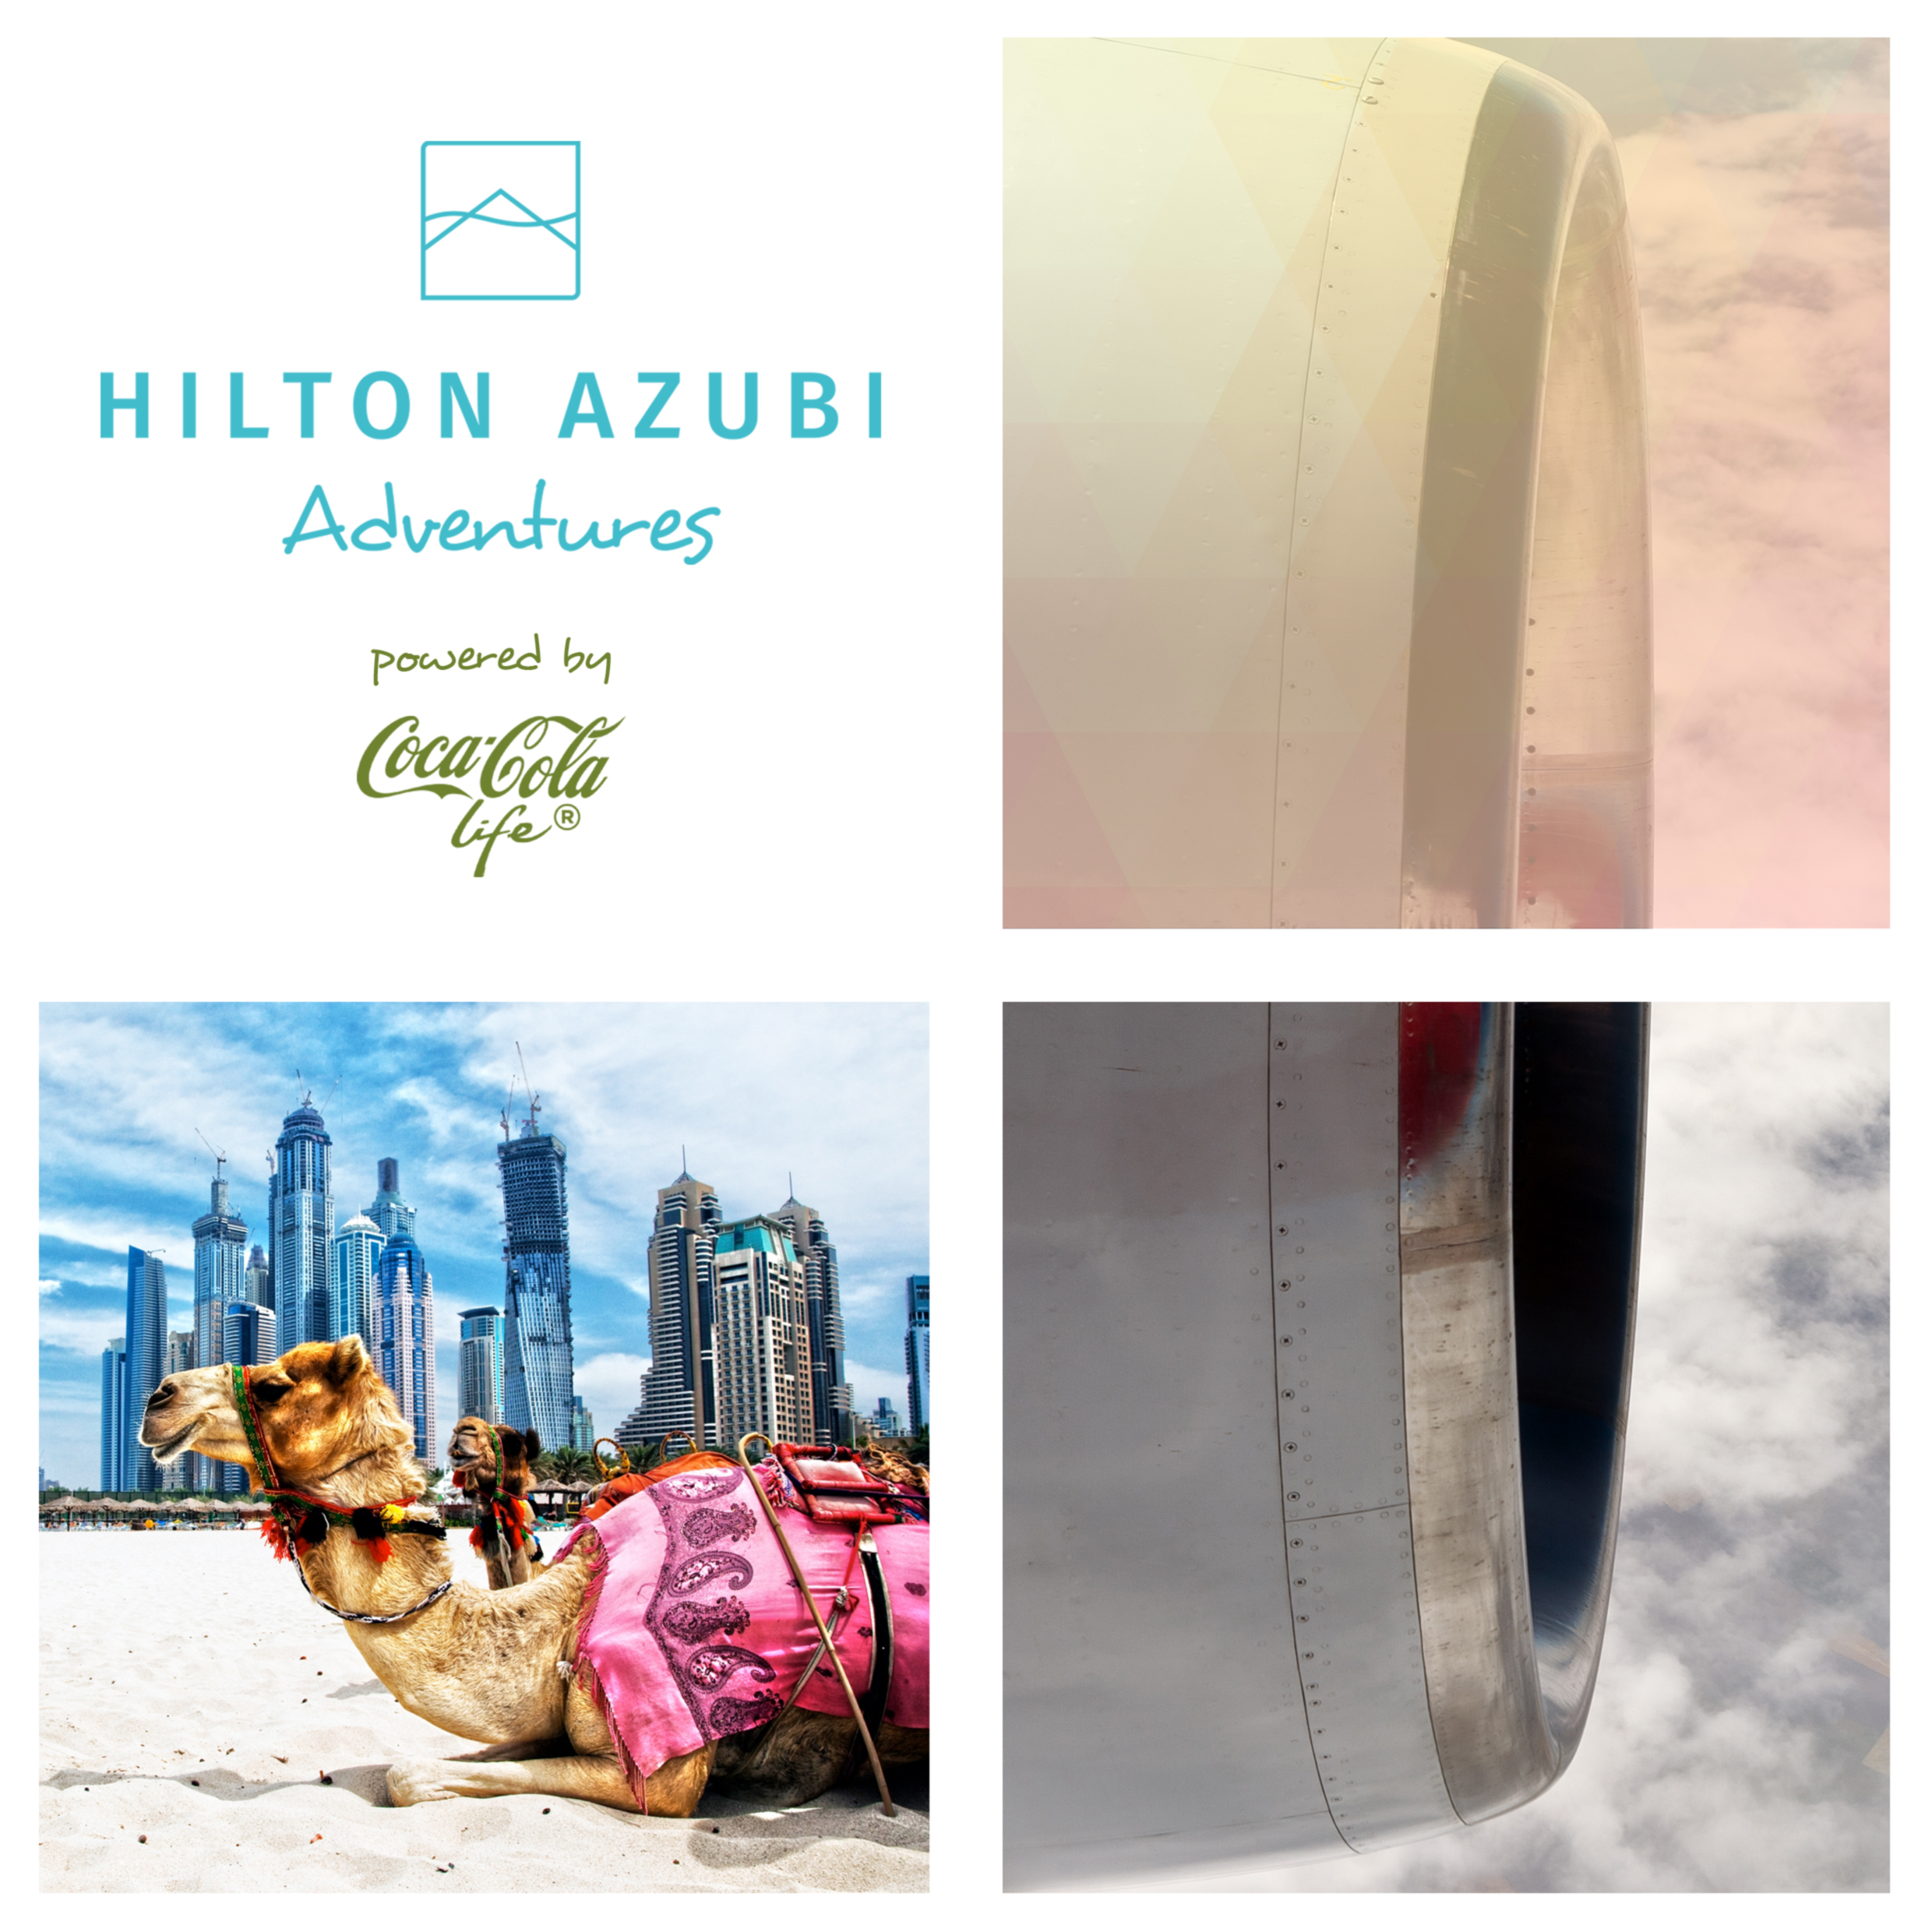 Hilton Azubi Adventures 2016 powered by Coca-Cola Life @Dubai